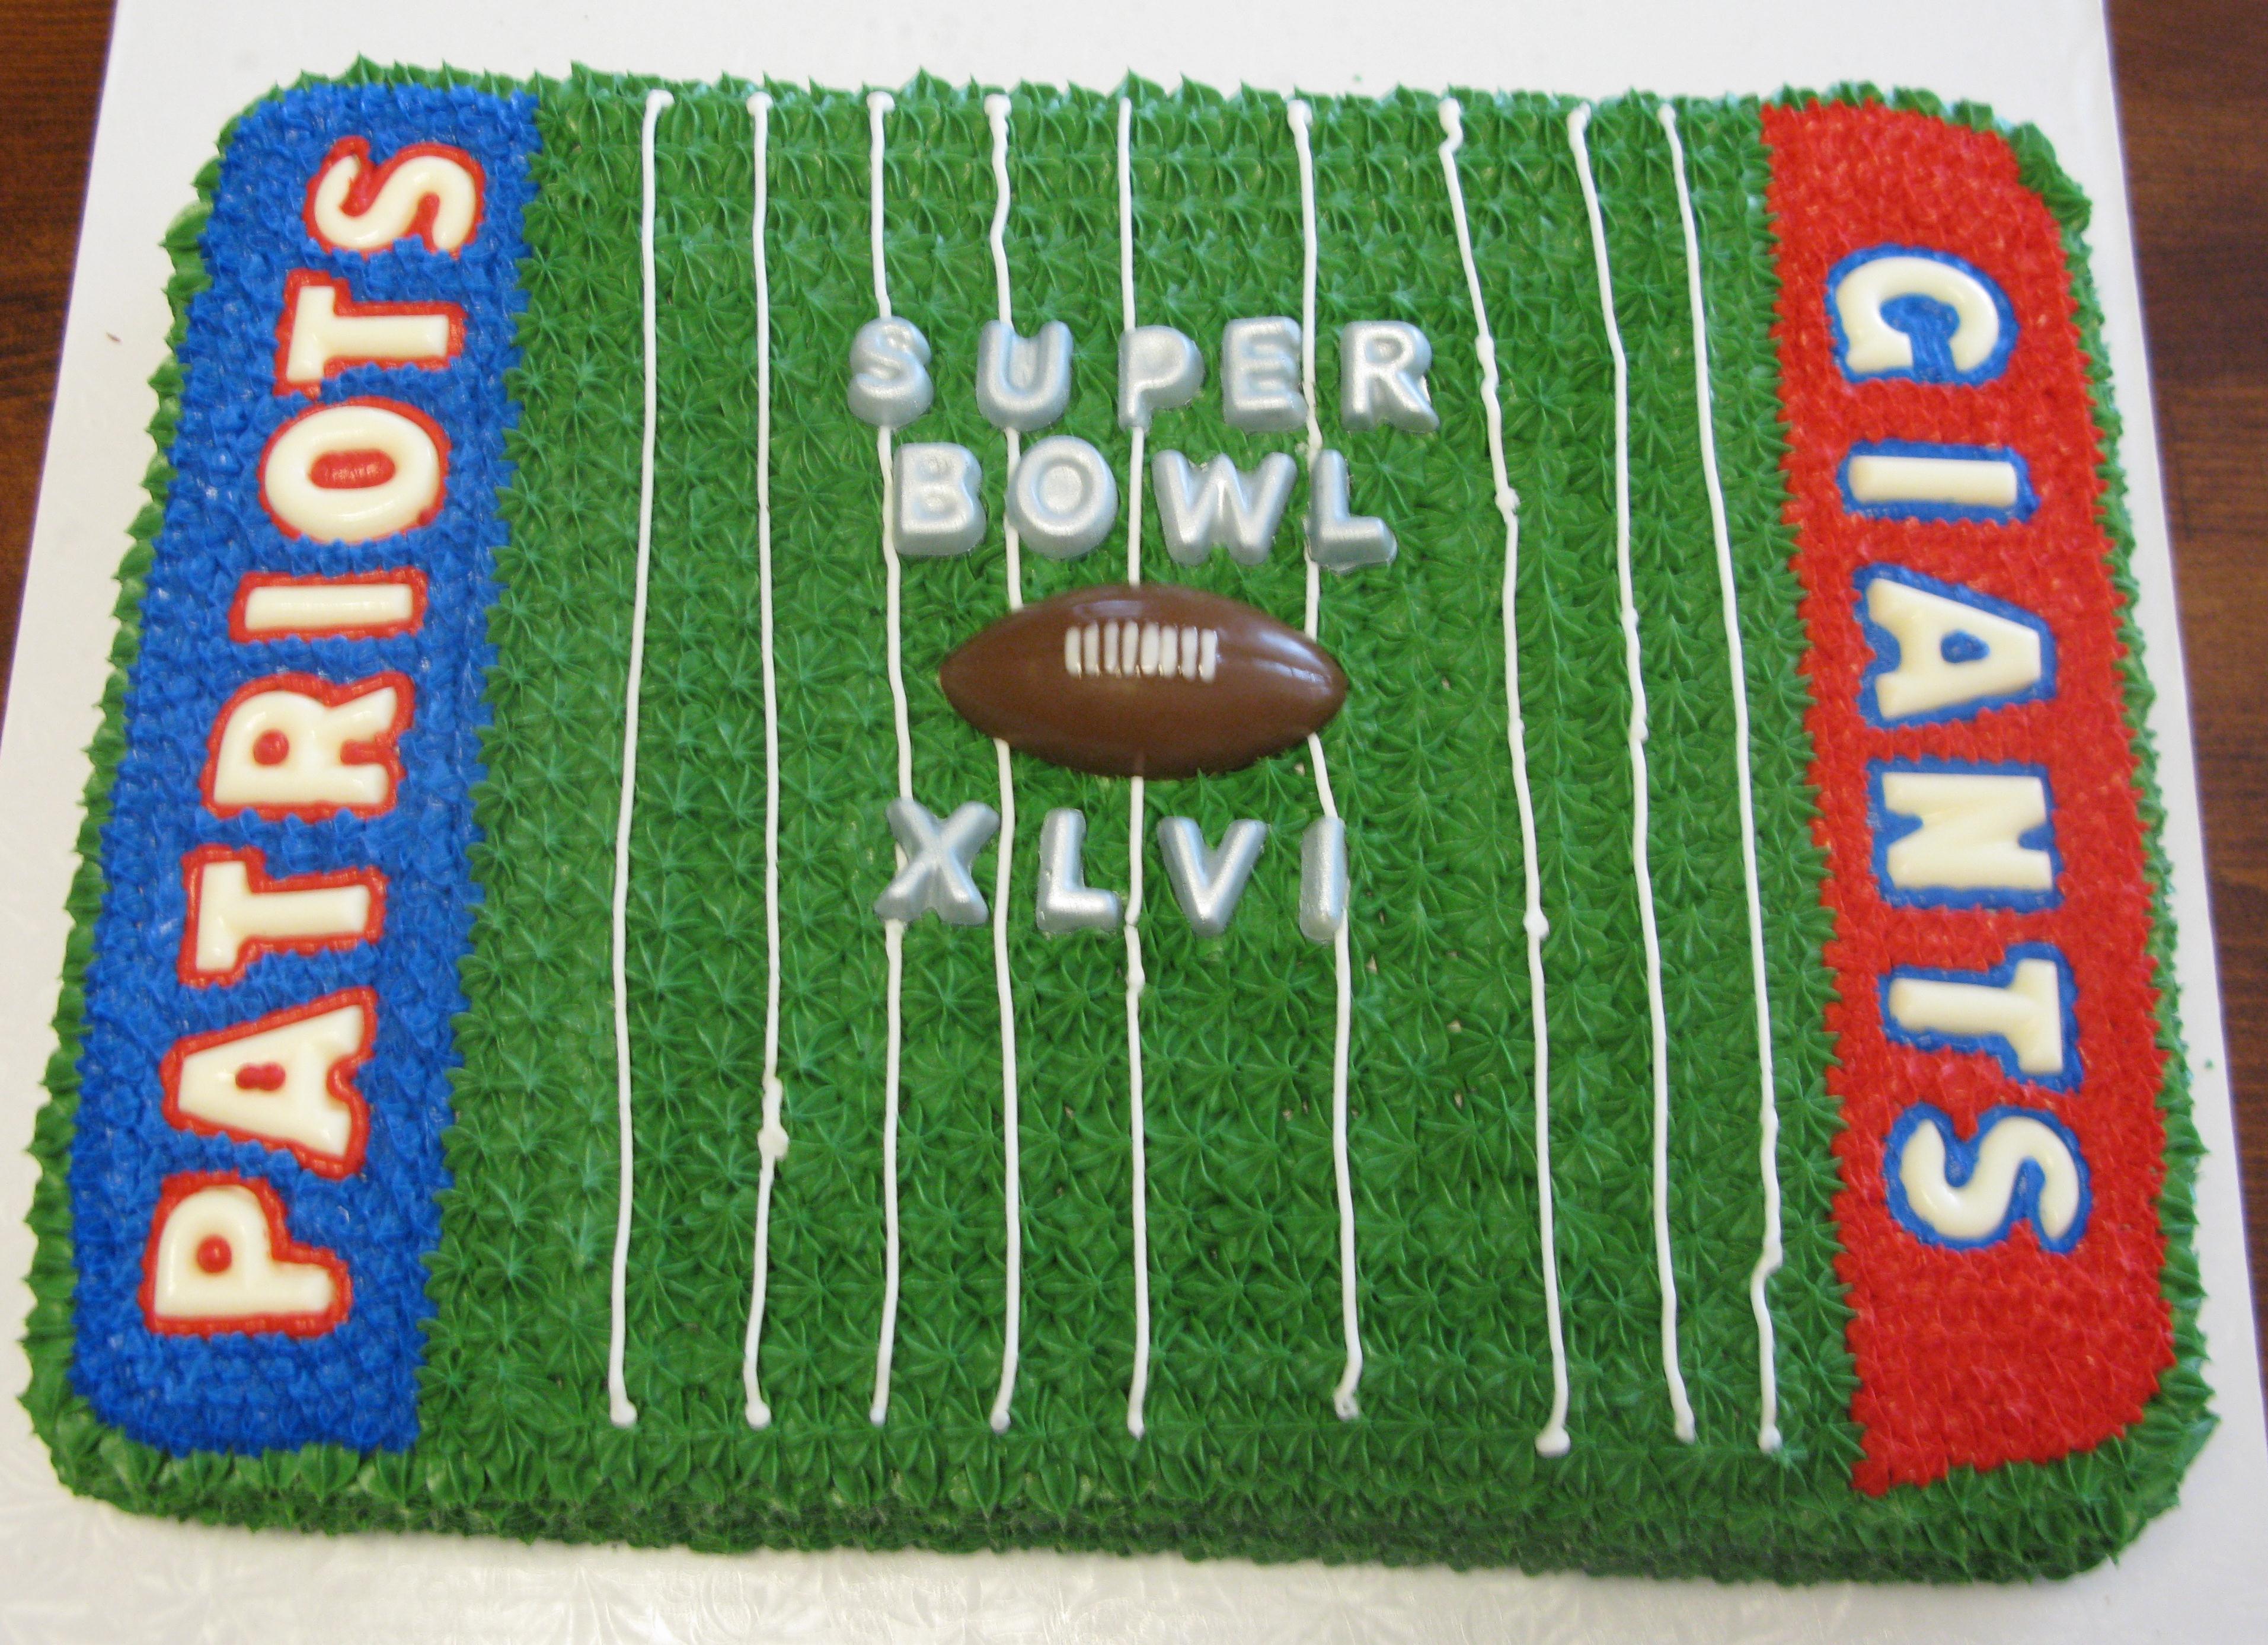 Super Bowl Football Field Cake